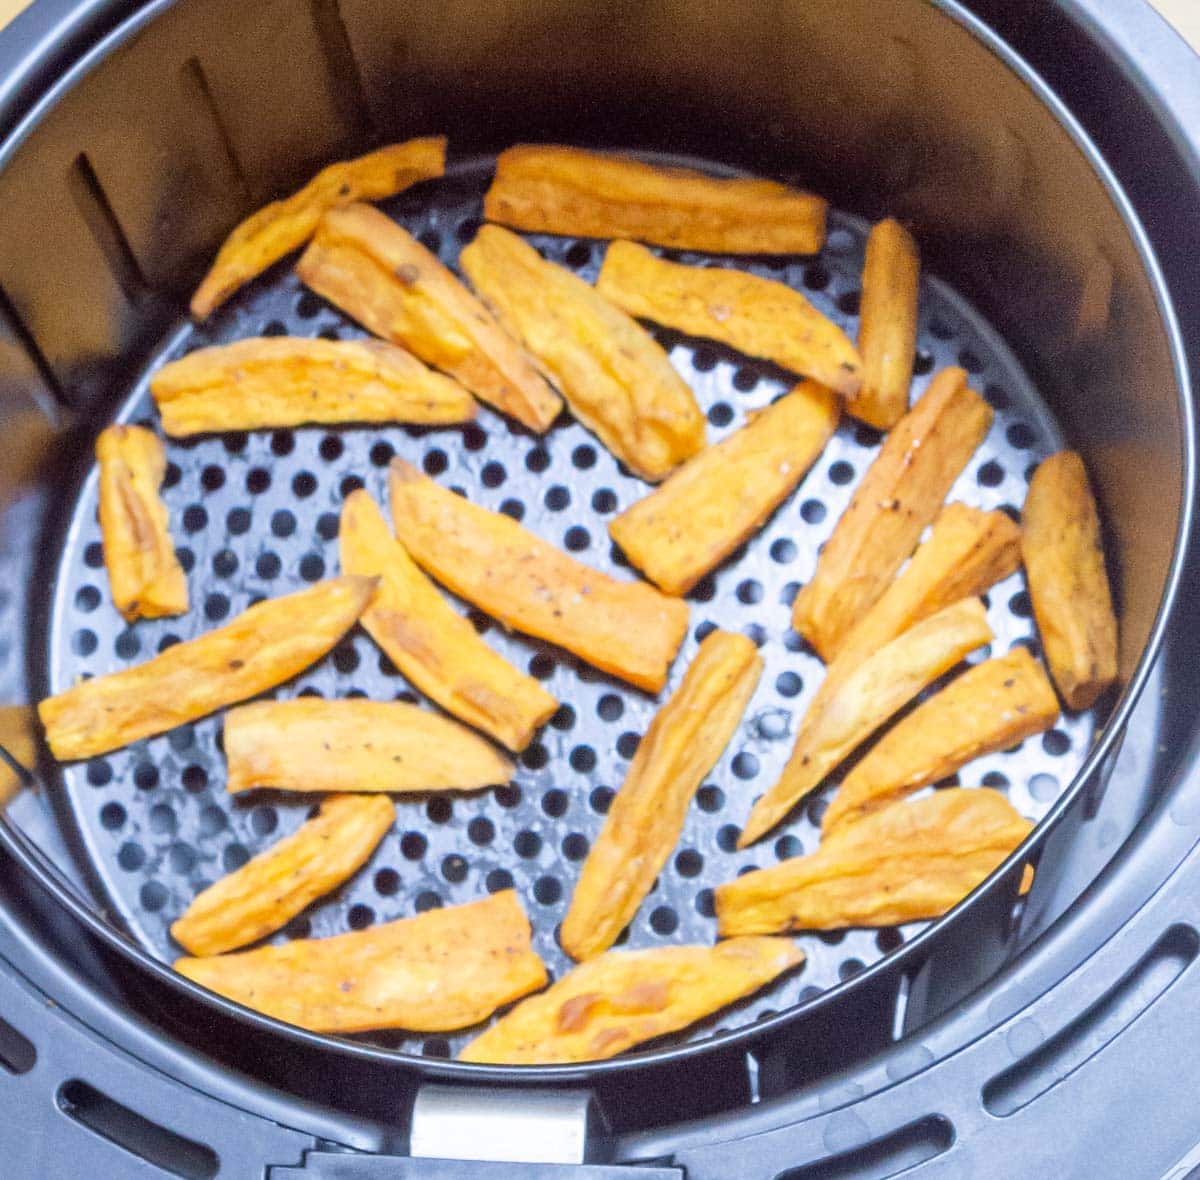 baked sweet potato wedges in air fryer basket.